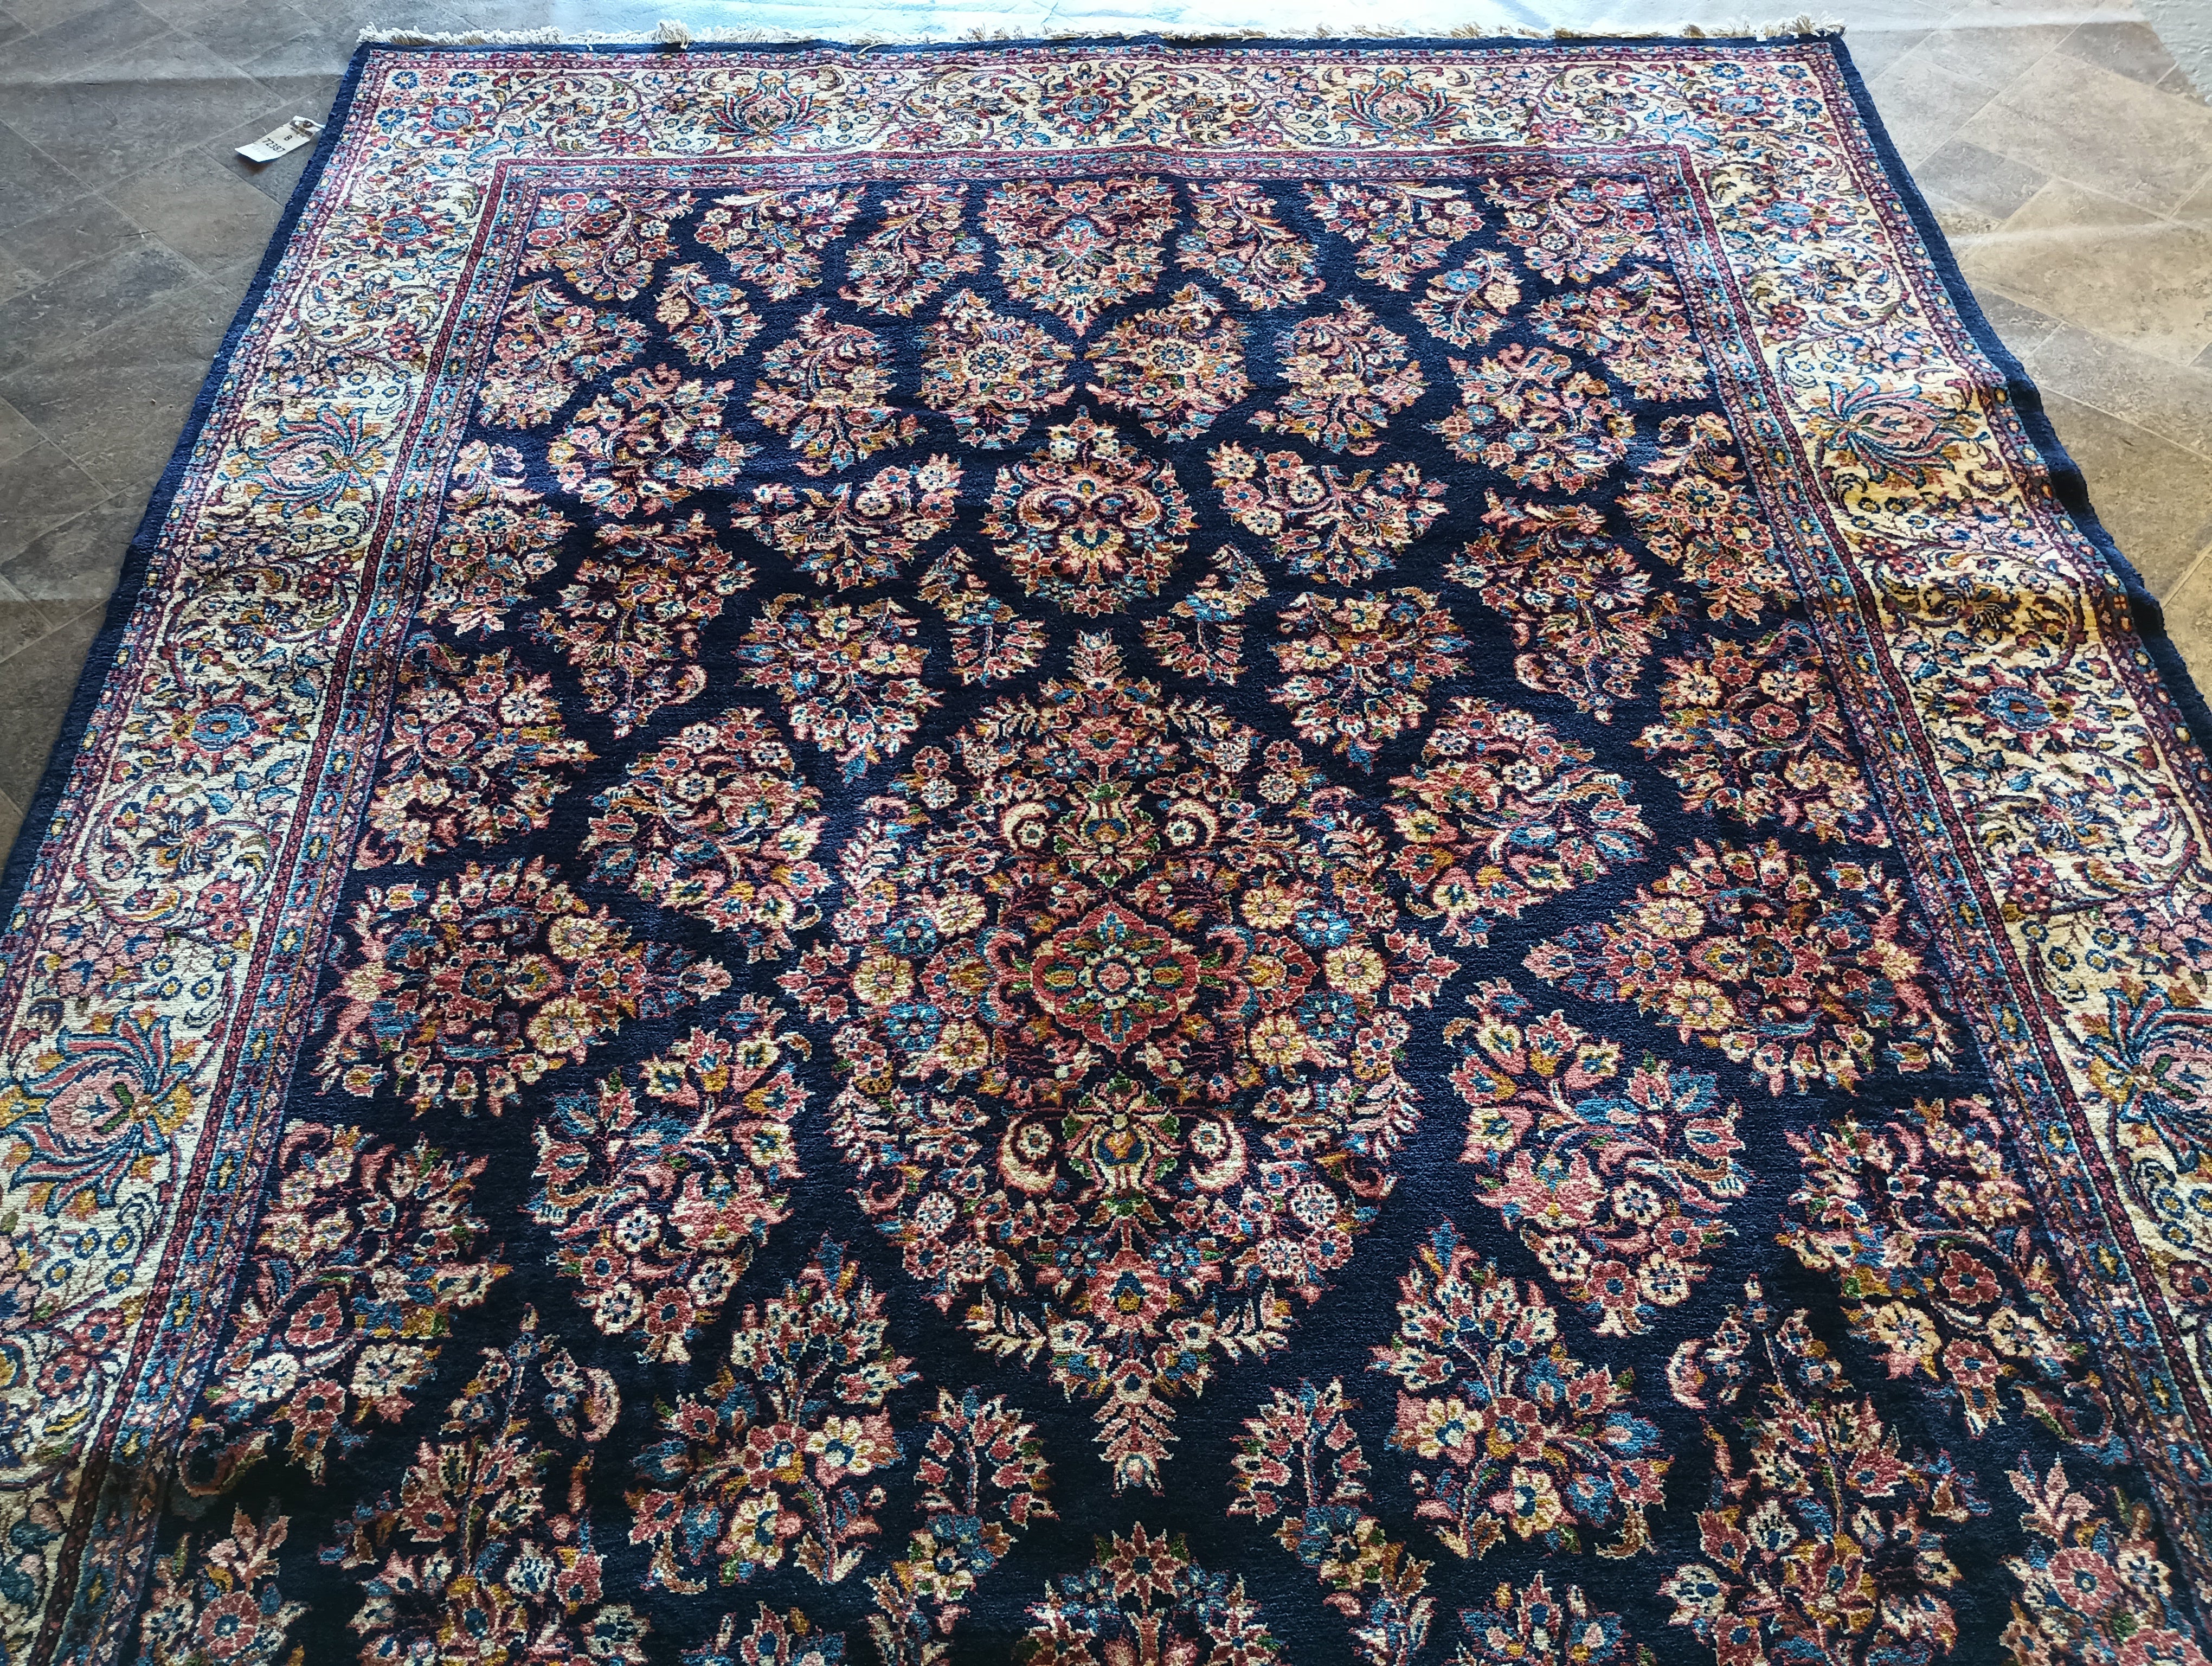 7' x 11' Classy Quality Persian Sarouk Rug Royal Blue #B-72387